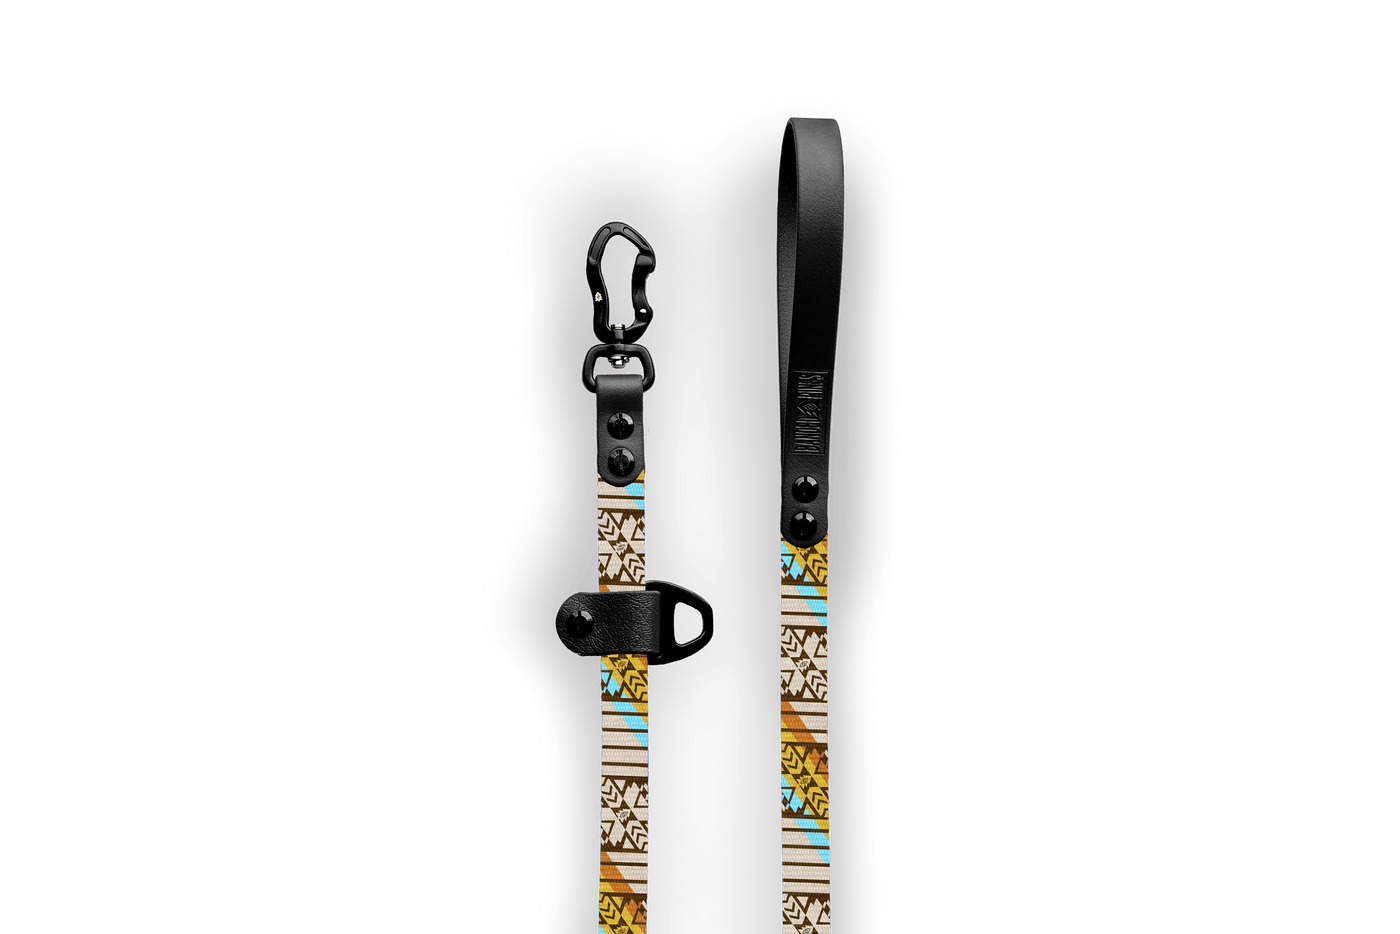 Monarch Teton Duraventure® Slip-Lead Dog Leash